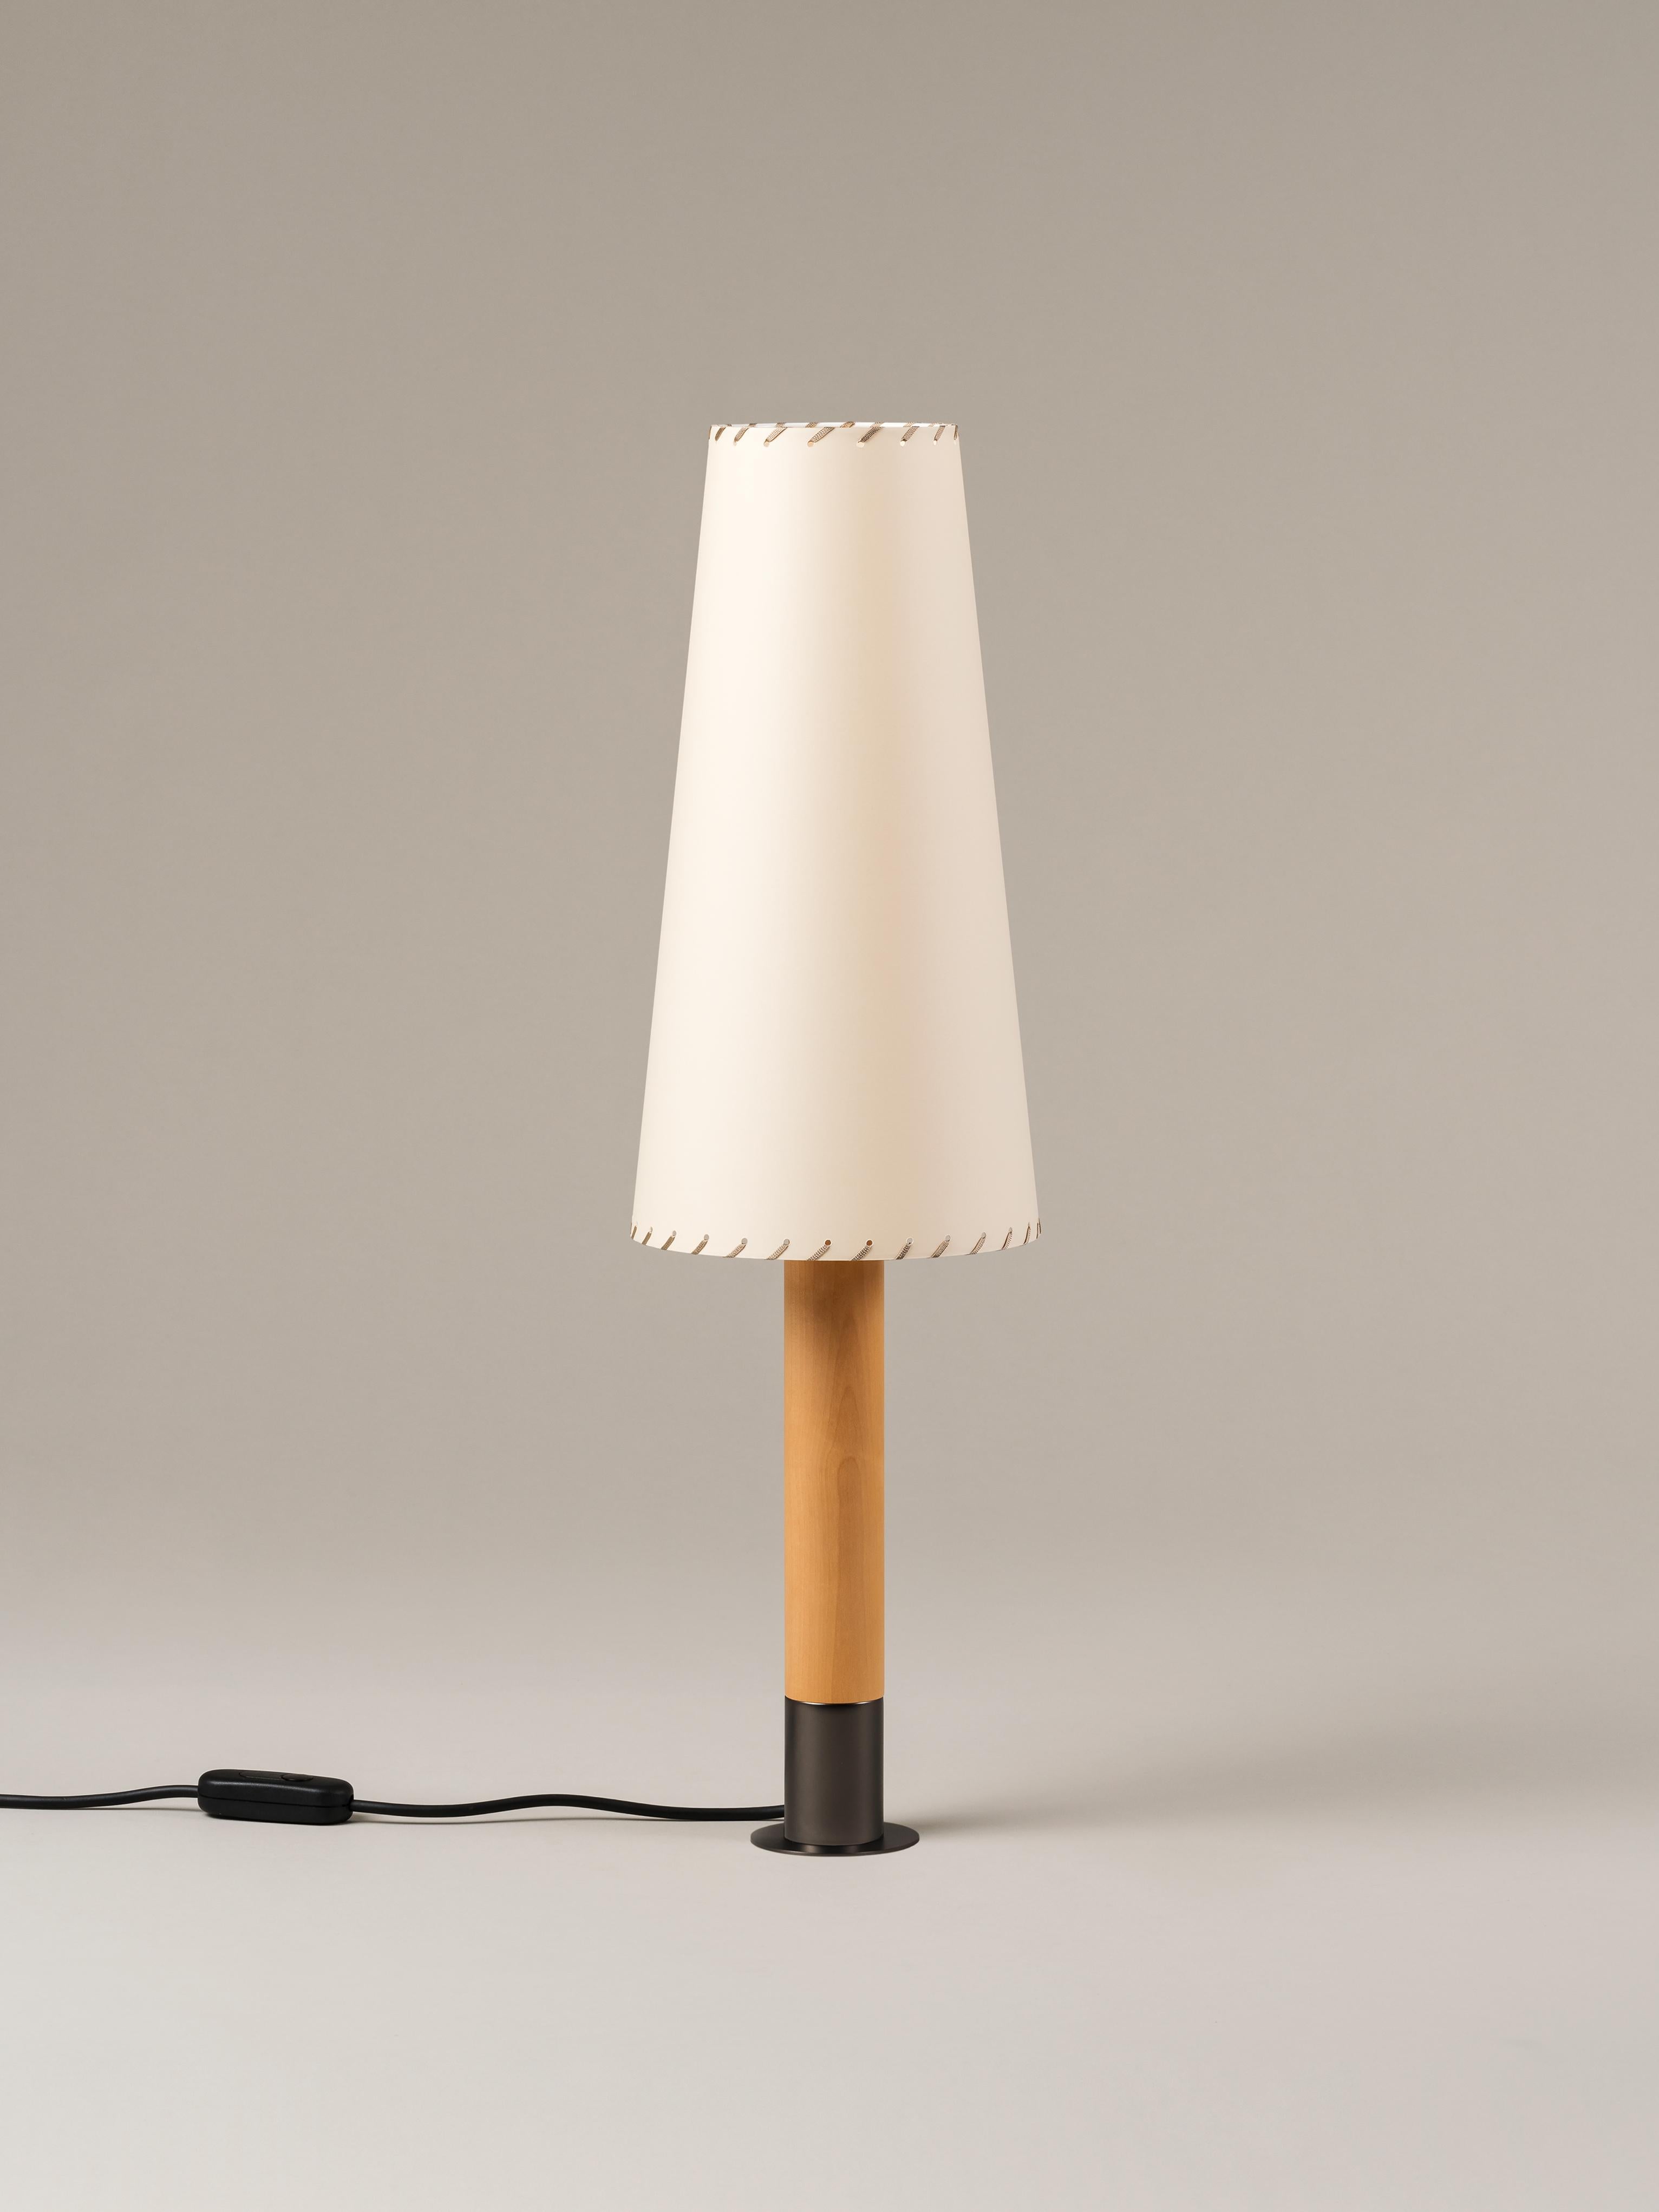 santiago table lamp